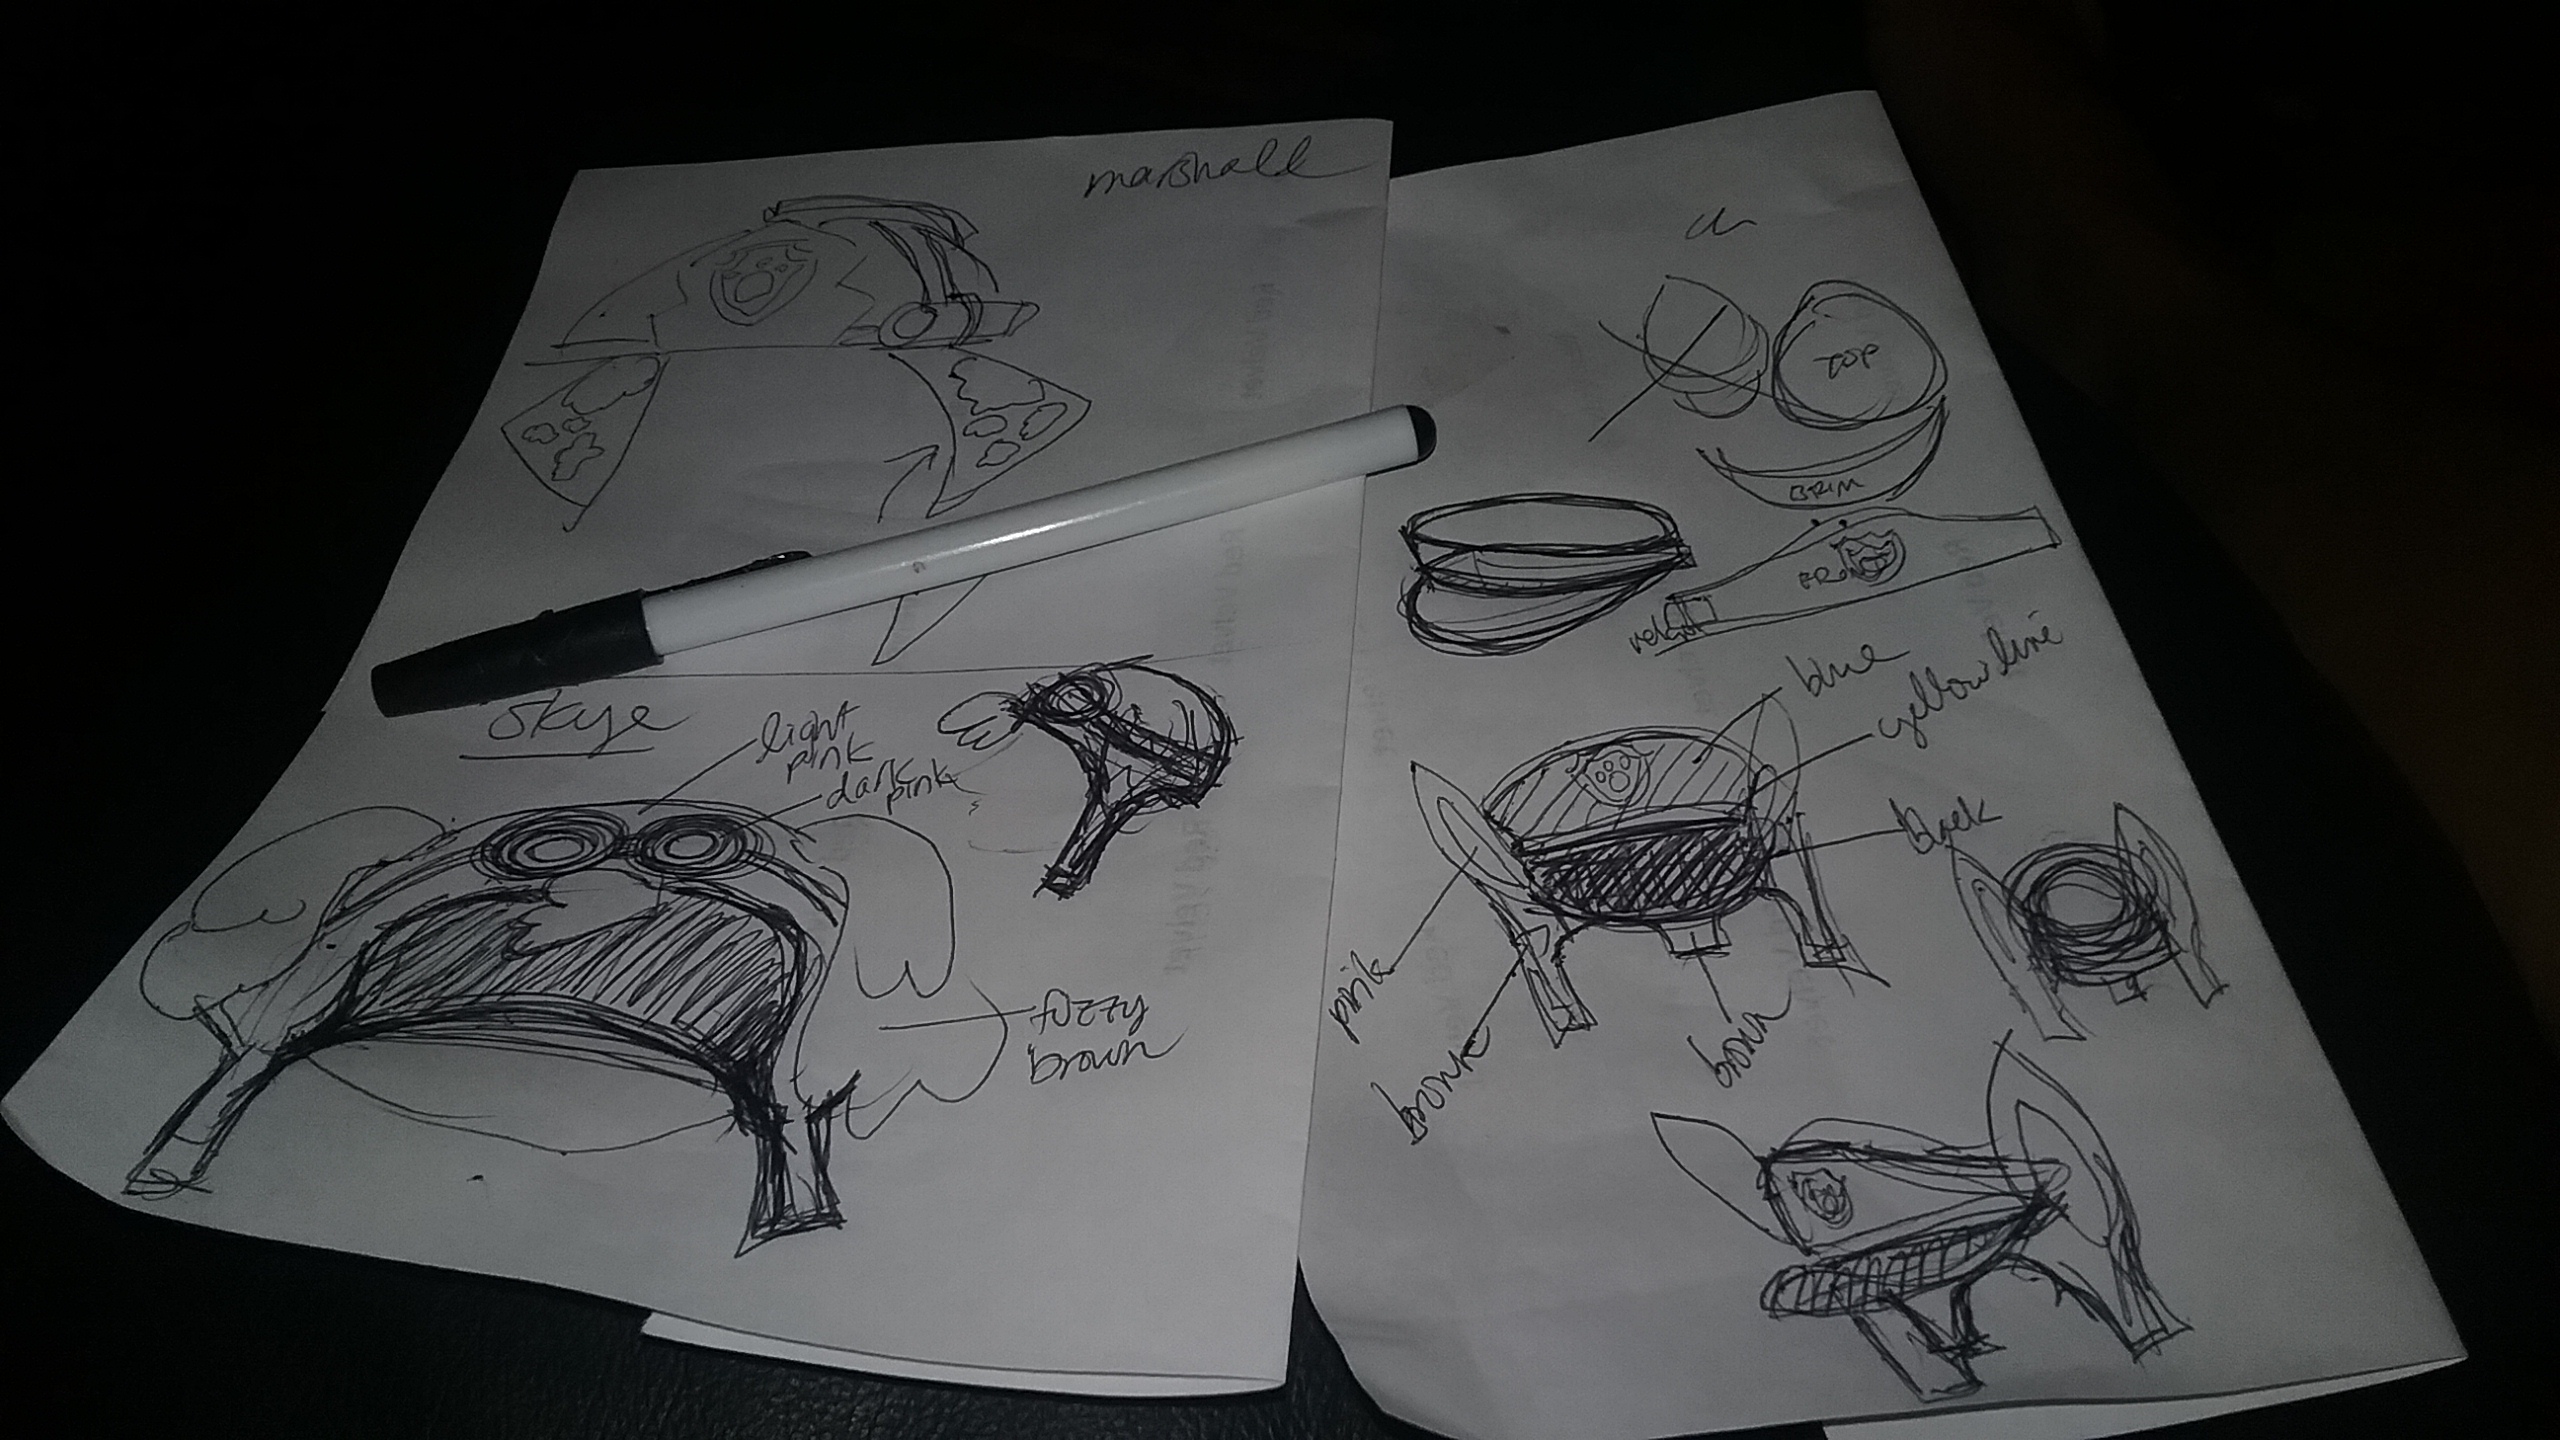 Sketchings of character hat designs